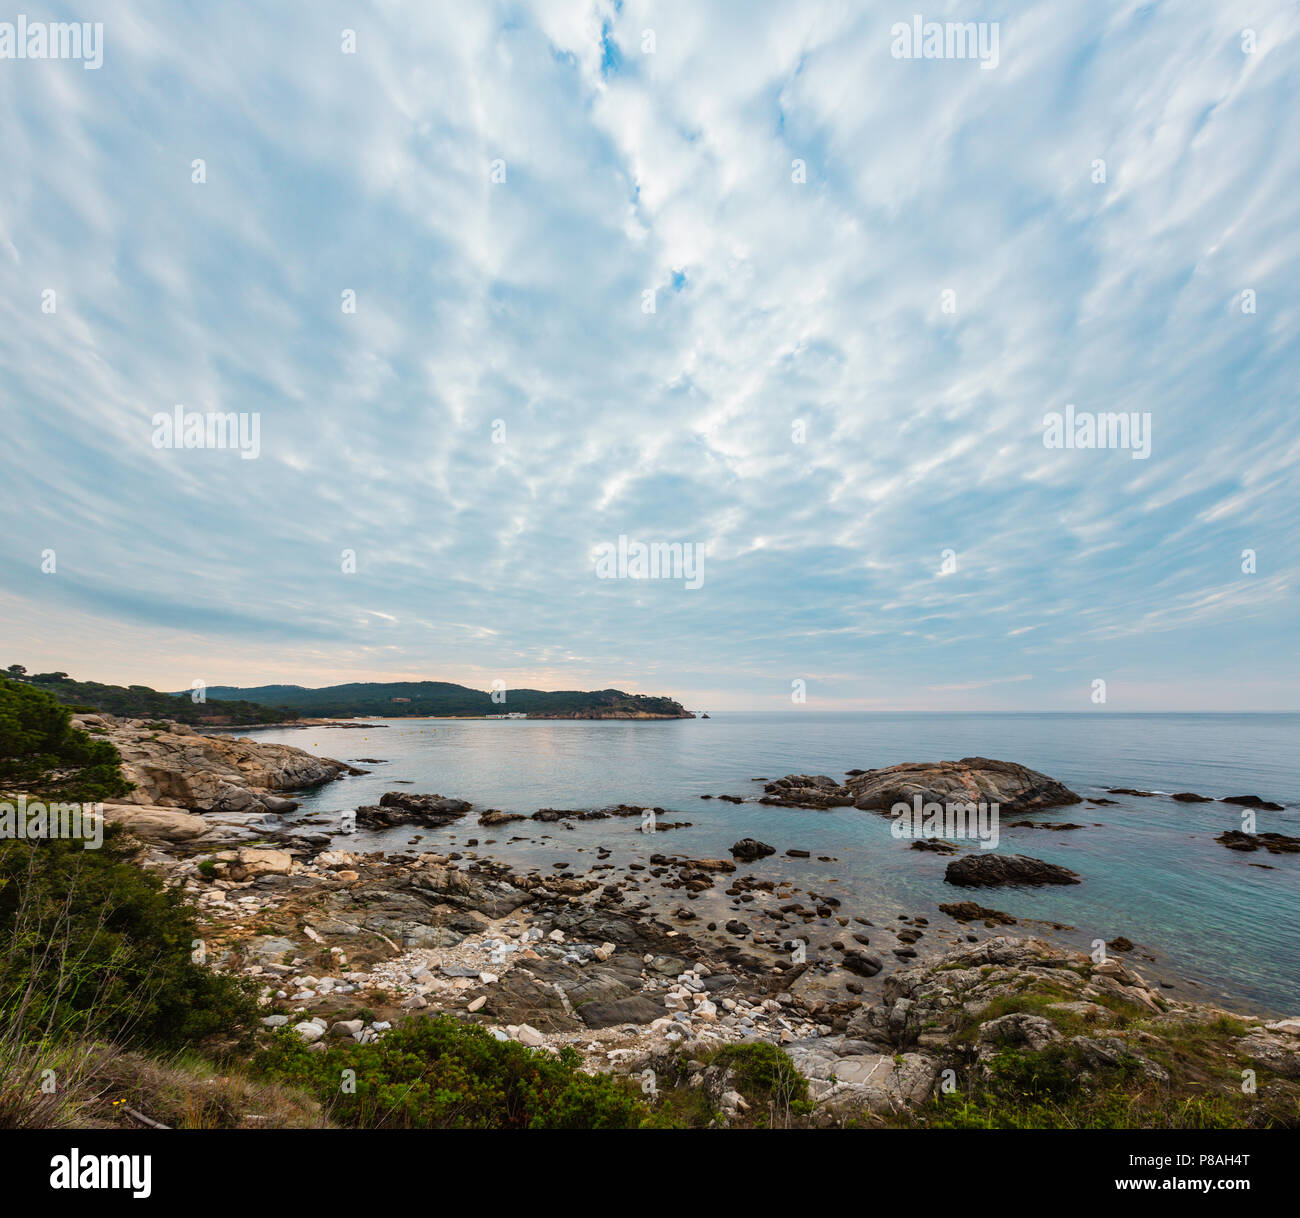 Summer morning sea coast landscape near Palamos, Girona, Costa Brava, Spain. Stock Photo